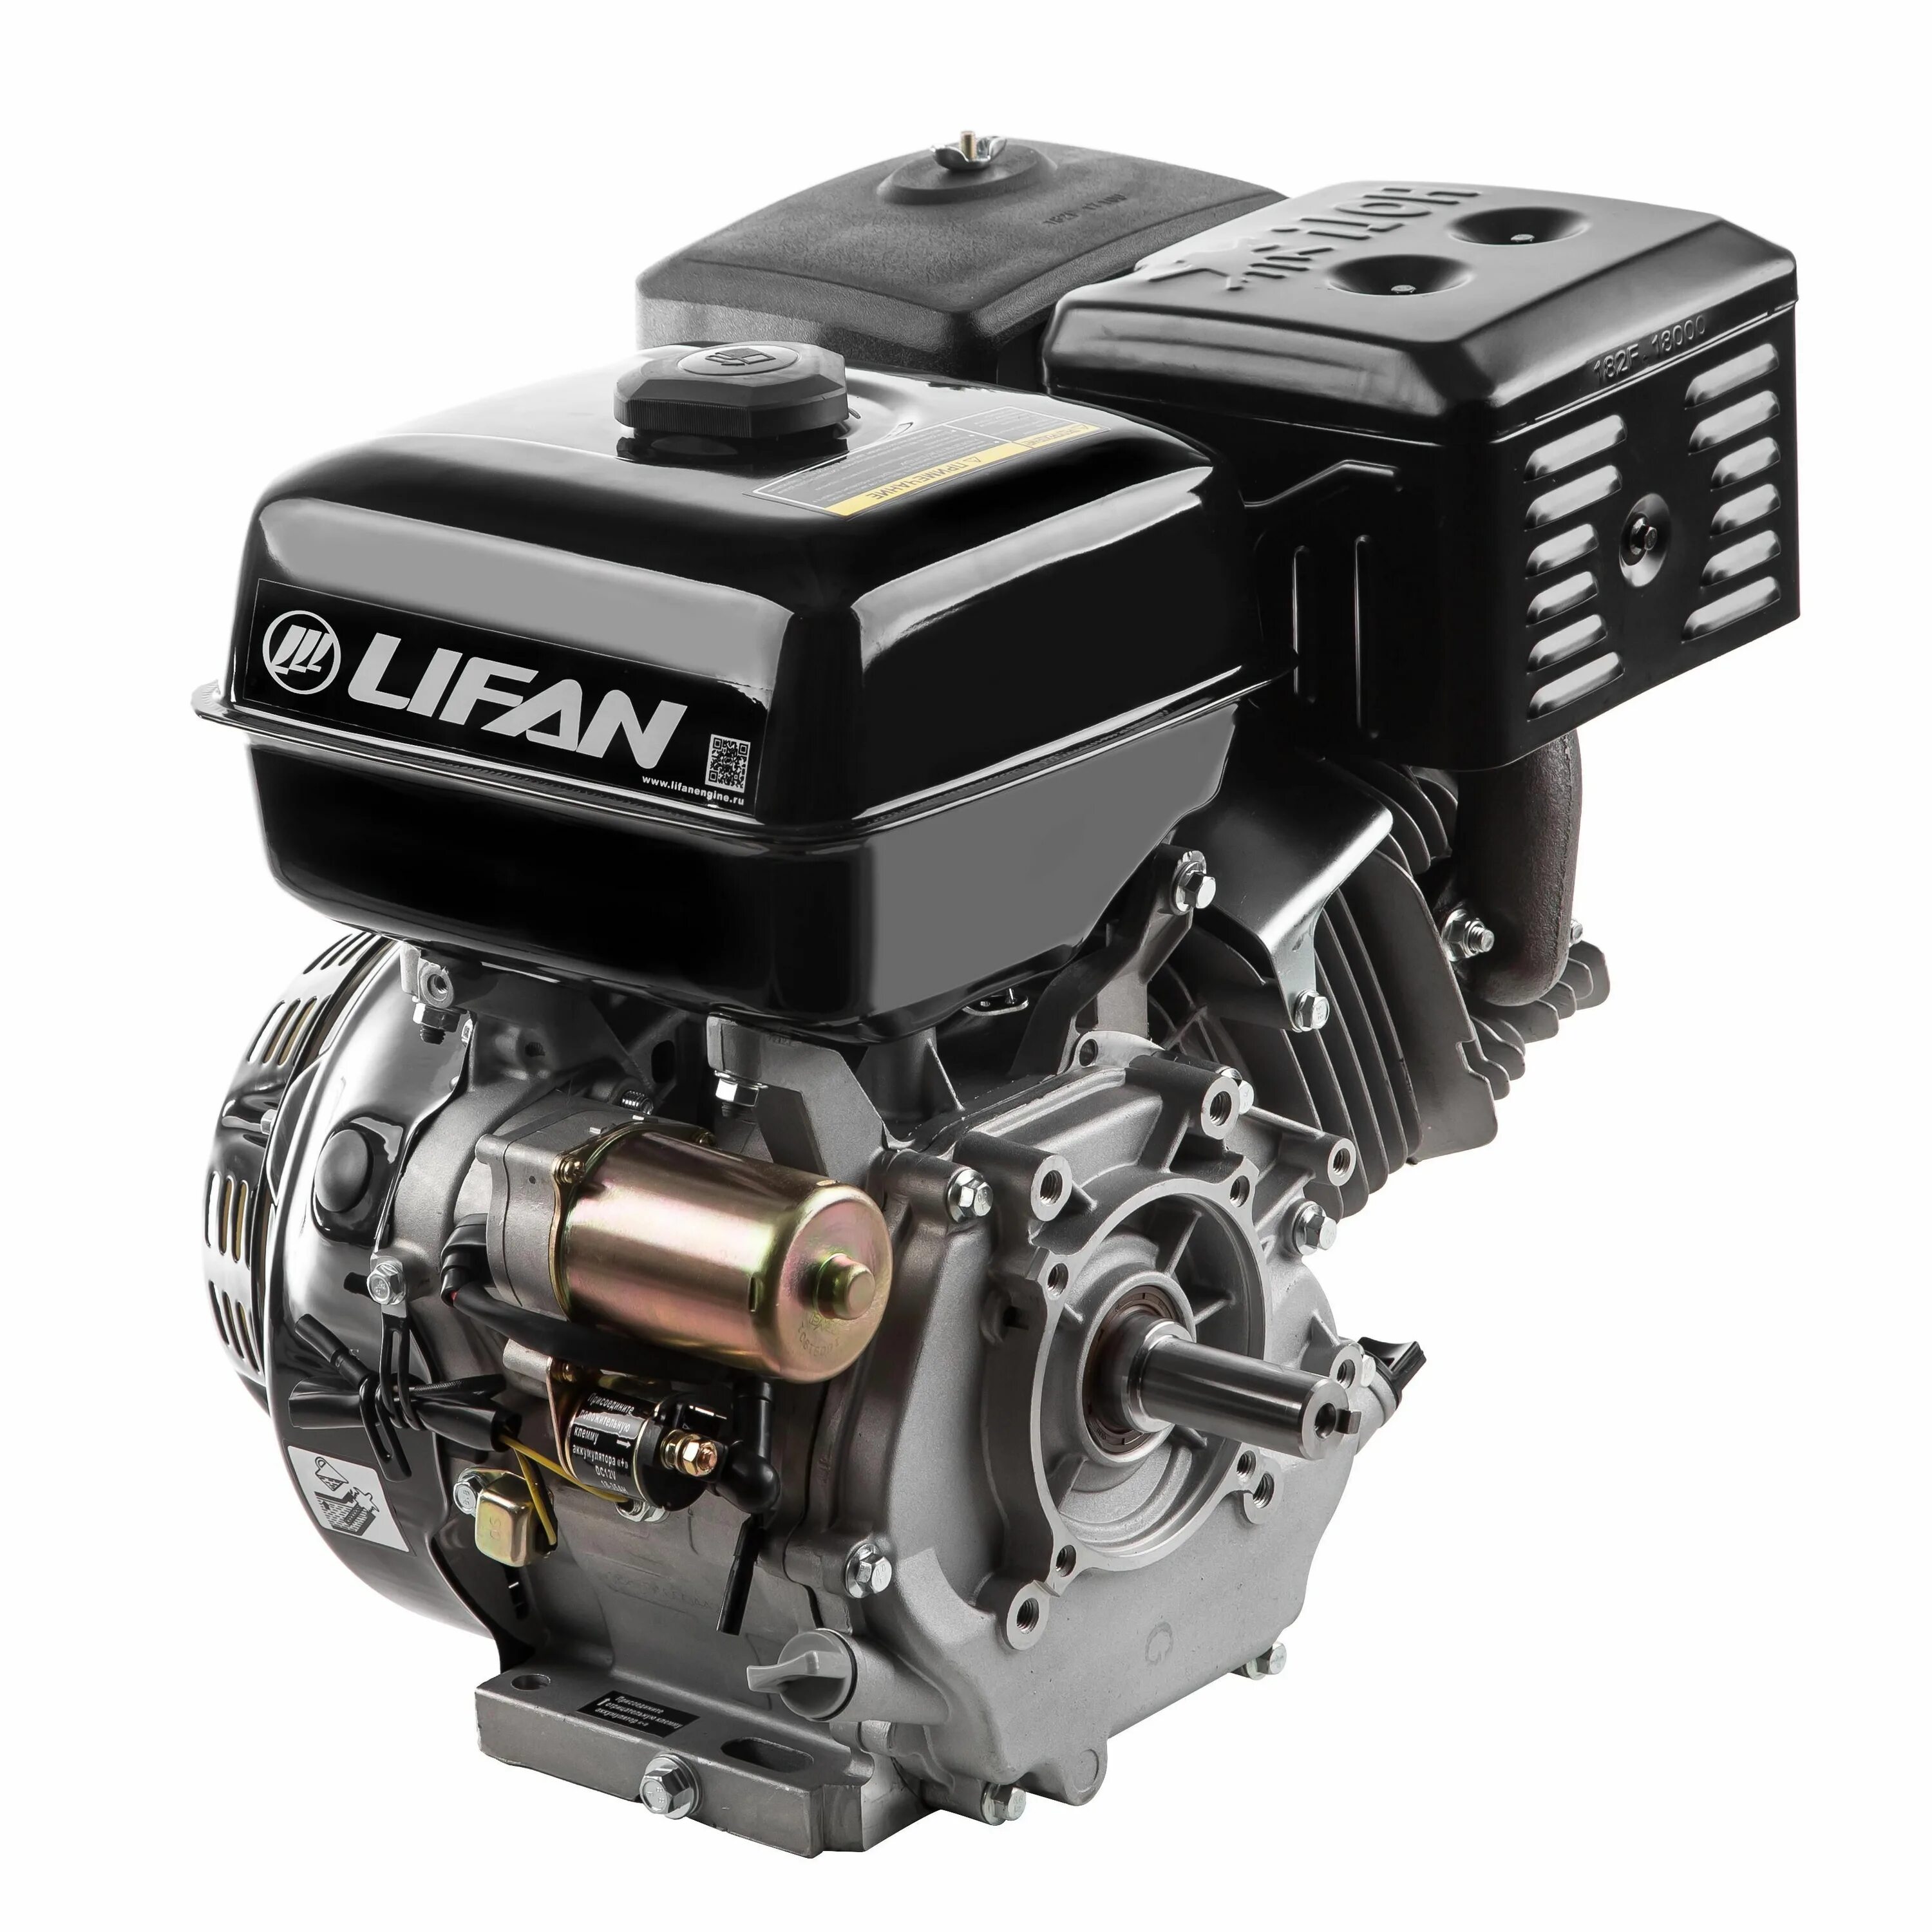 Двигатели lifan с электростартером. Lifan 188fd. Lifan 190 FD 18a. Бензиновый двигатель Лифан 15 л.с. Lifan 188fd-r.